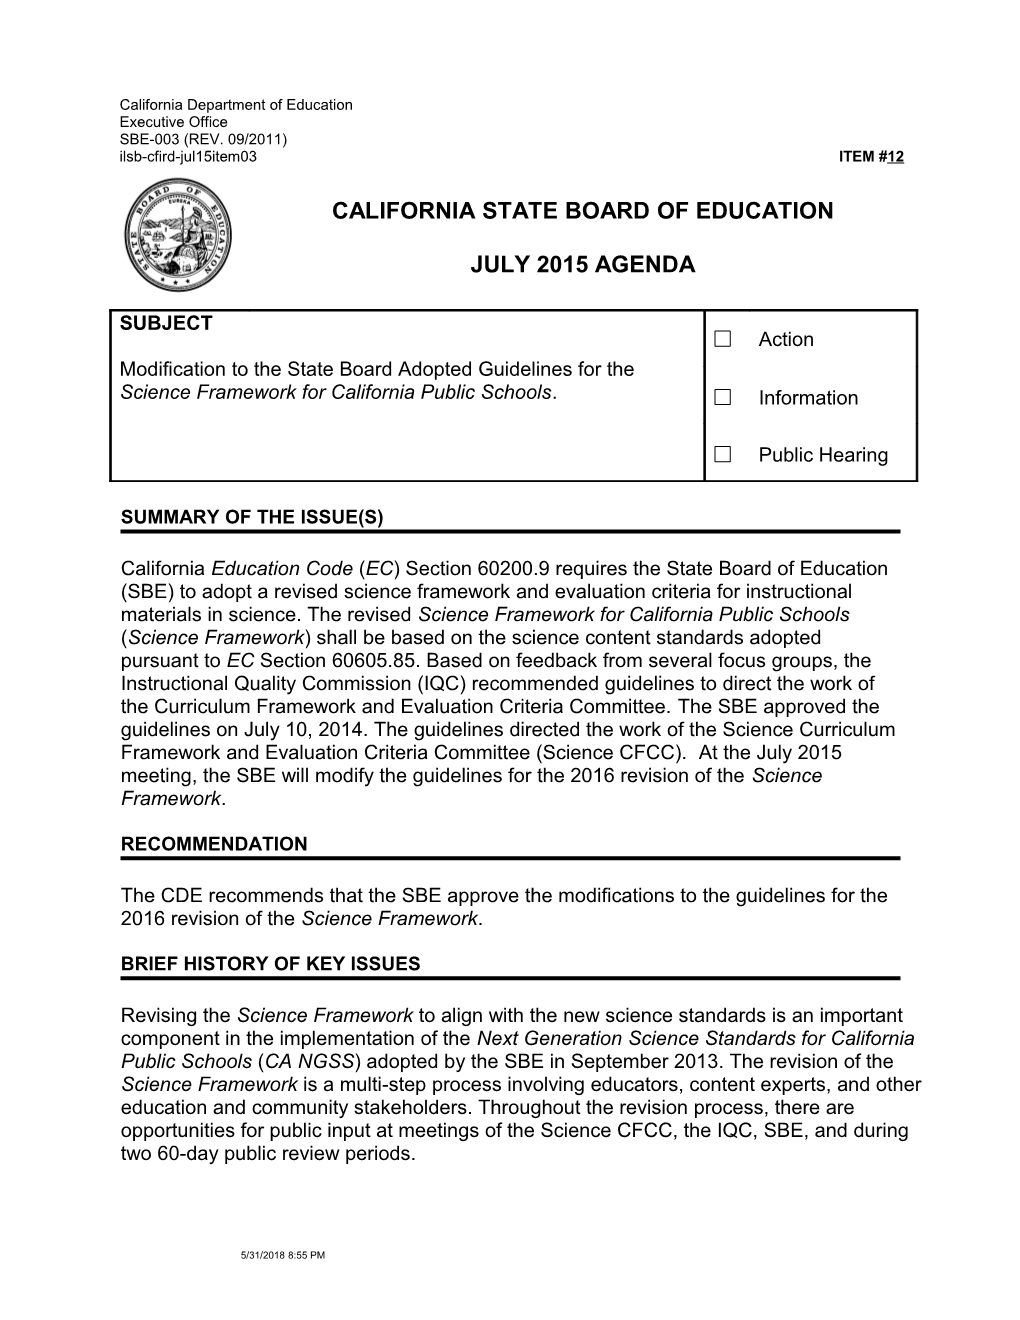 July 2015 Agenda Item 12 - Meeting Agendas (CA State Board of Education)